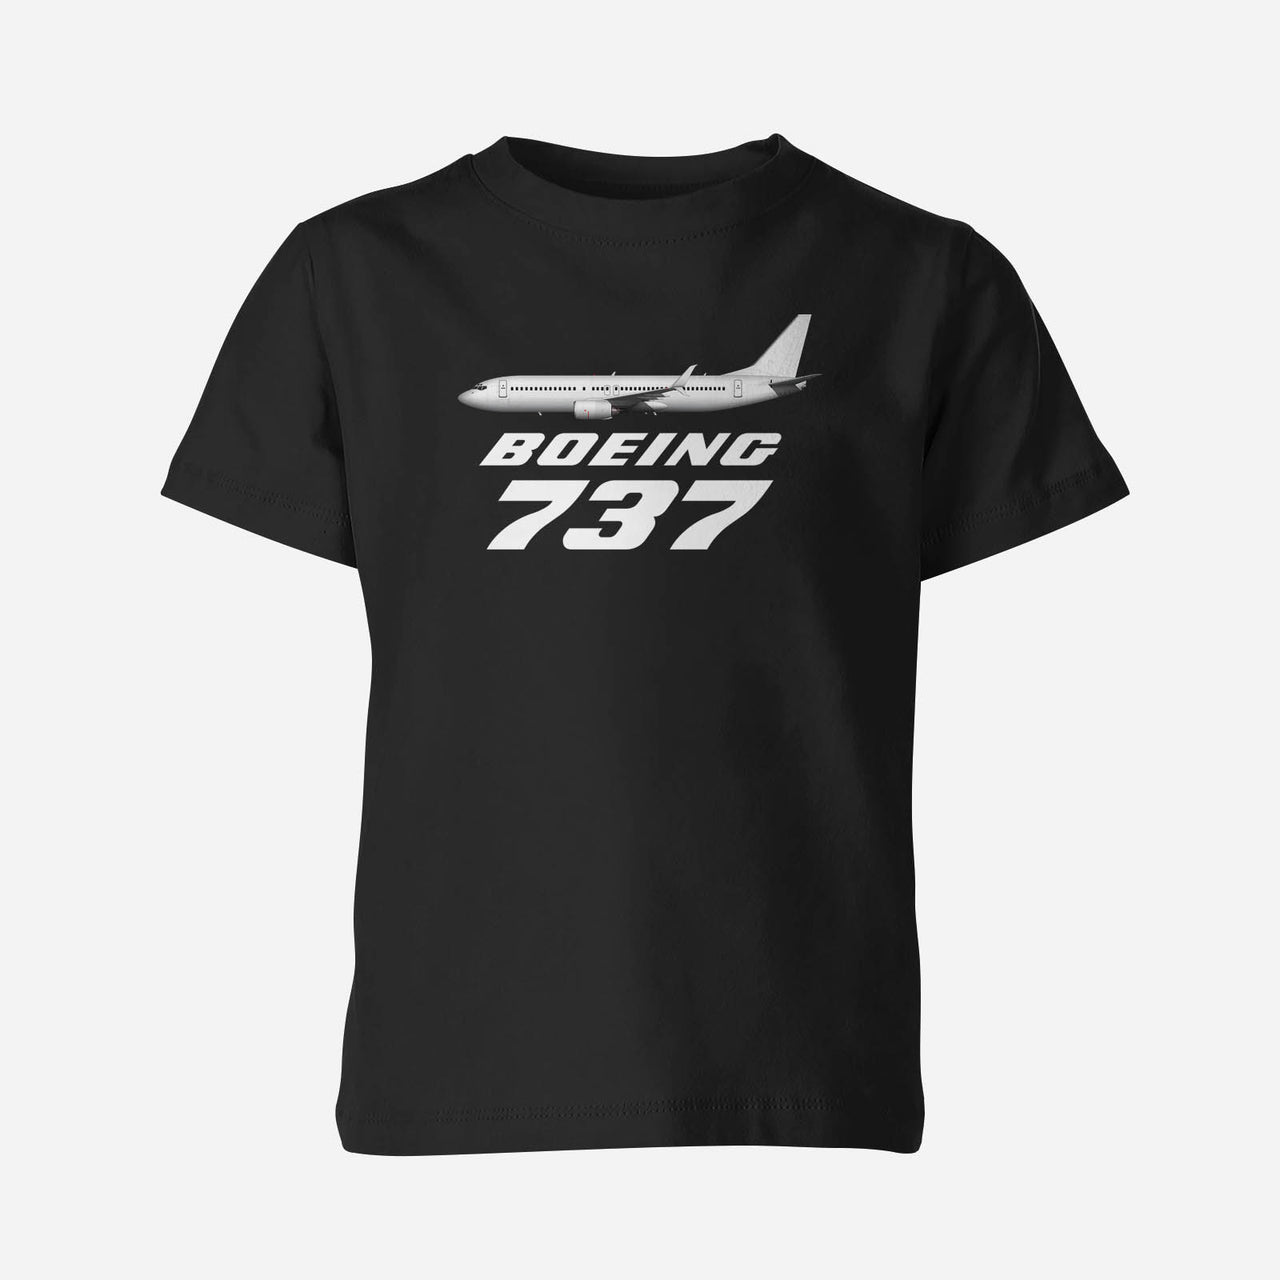 The Boeing 737 Designed Children T-Shirts